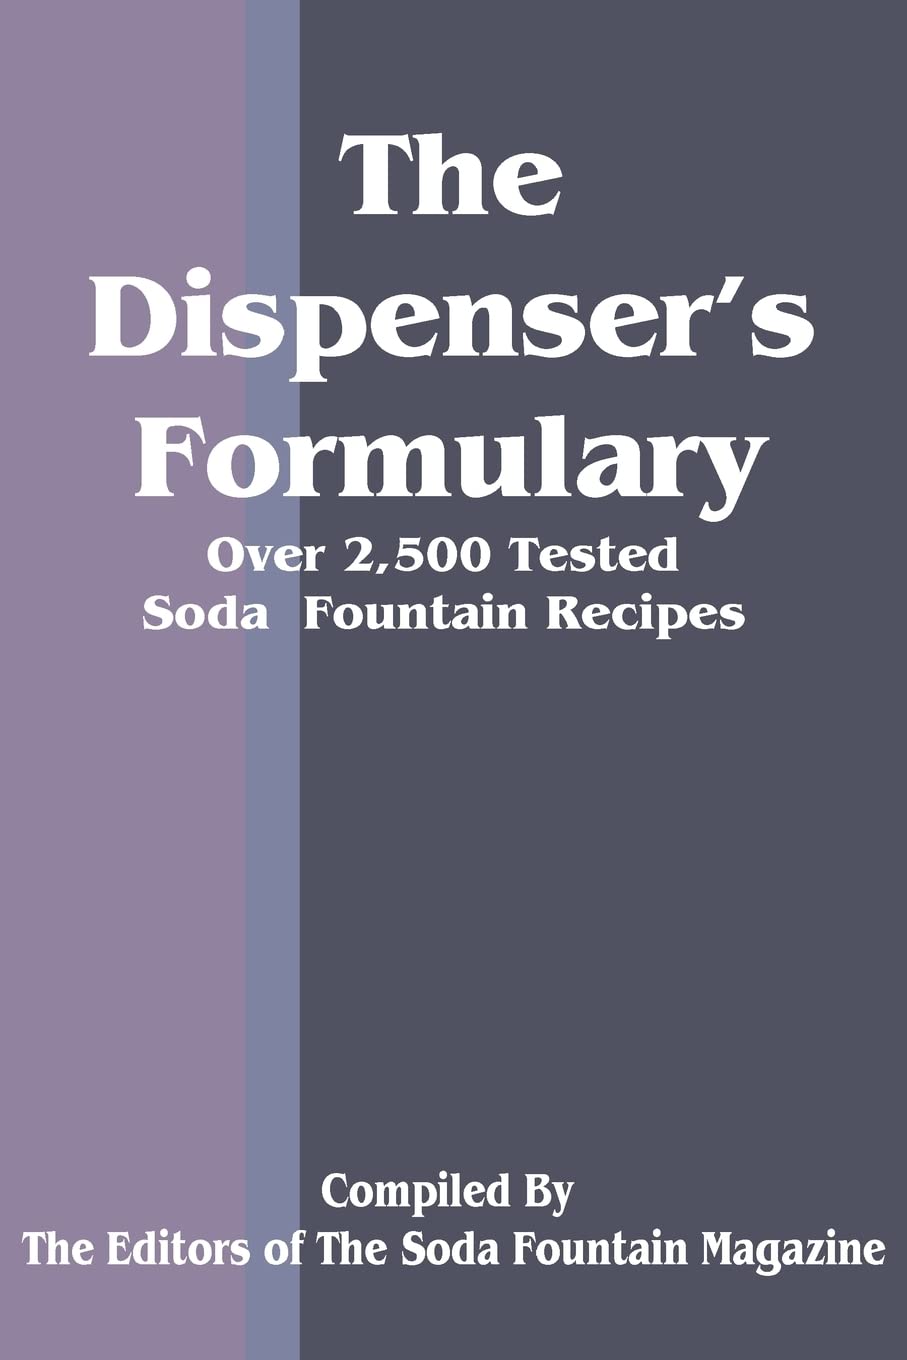 Dispenser's Formulary: A Handbook of Over 2,500 Tested Recipes - SureShot Books Publishing LLC